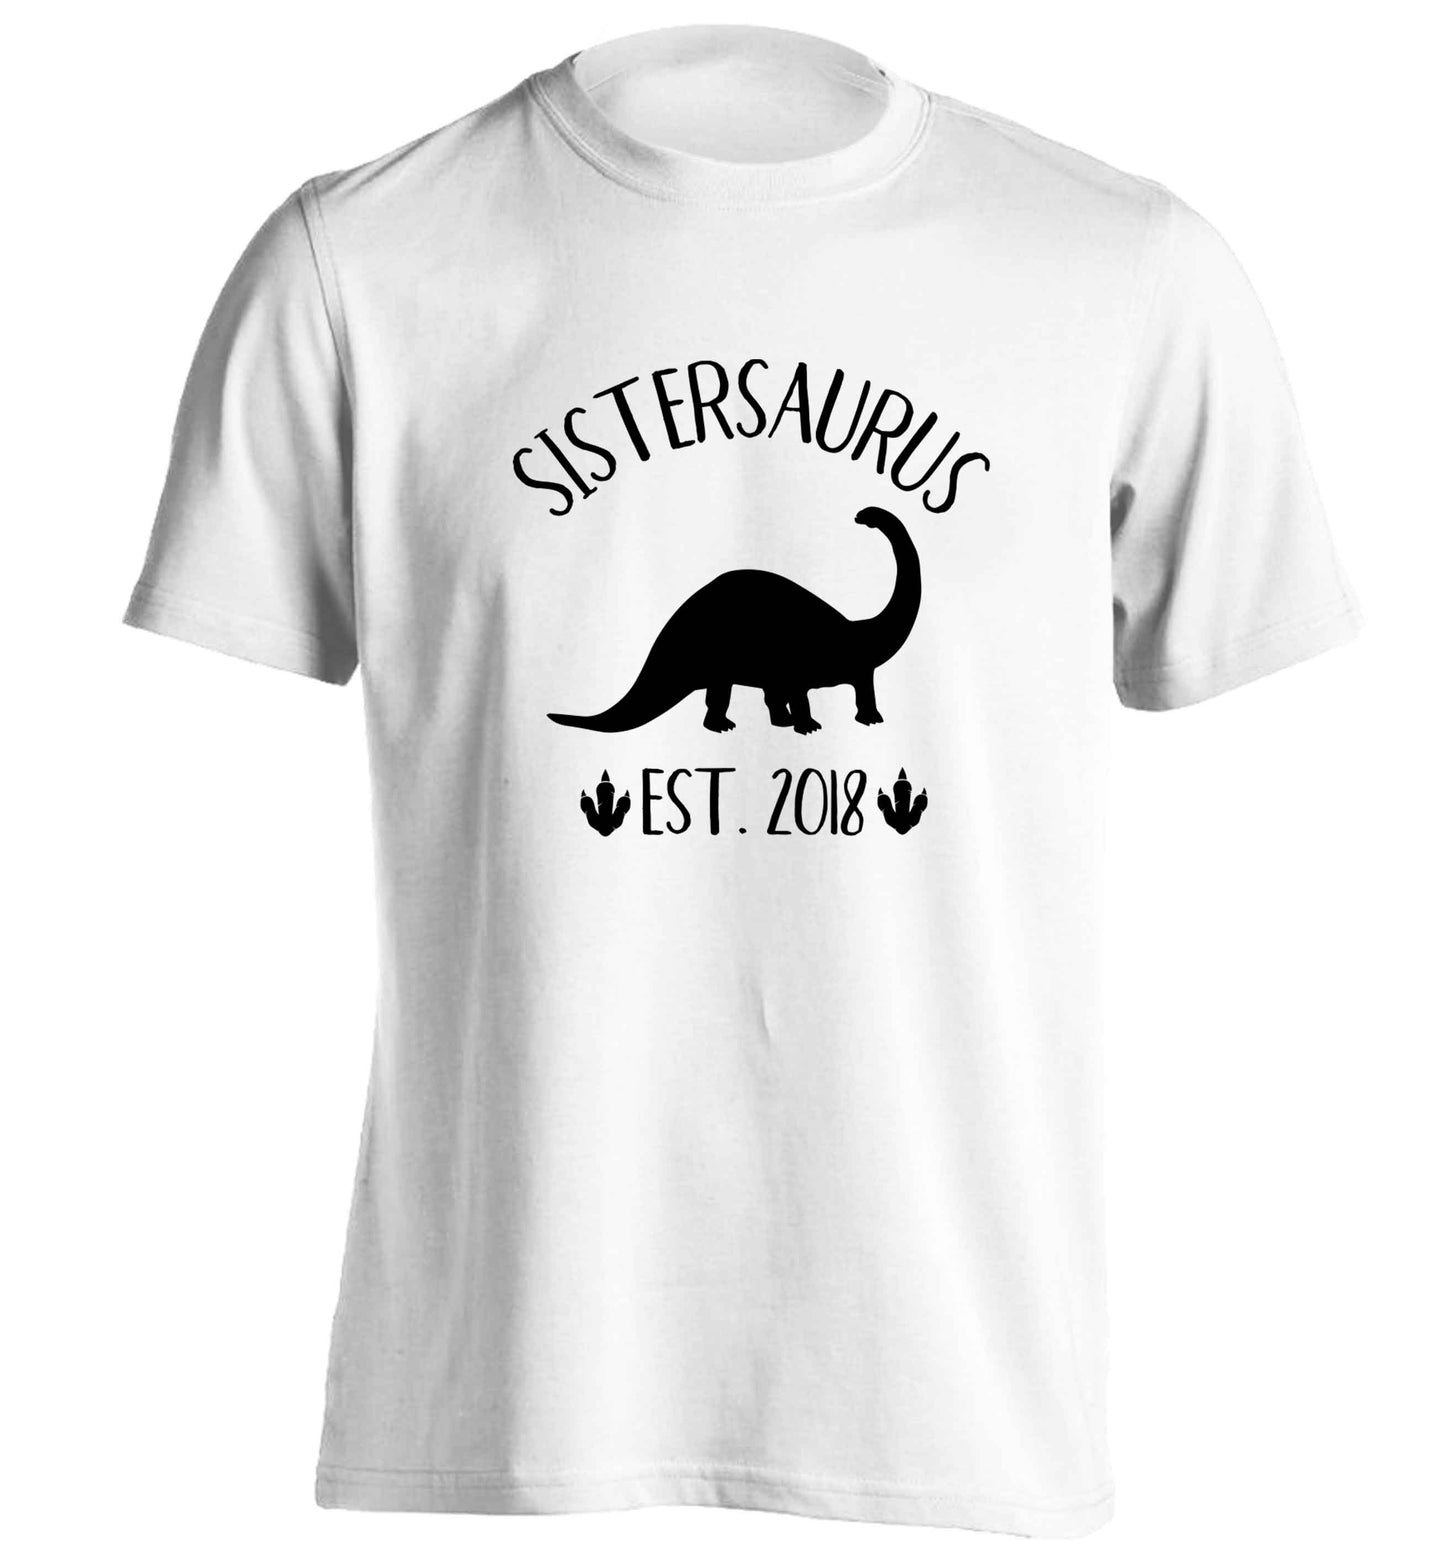 Personalised sistersaurus since (custom date) adults unisex white Tshirt 2XL